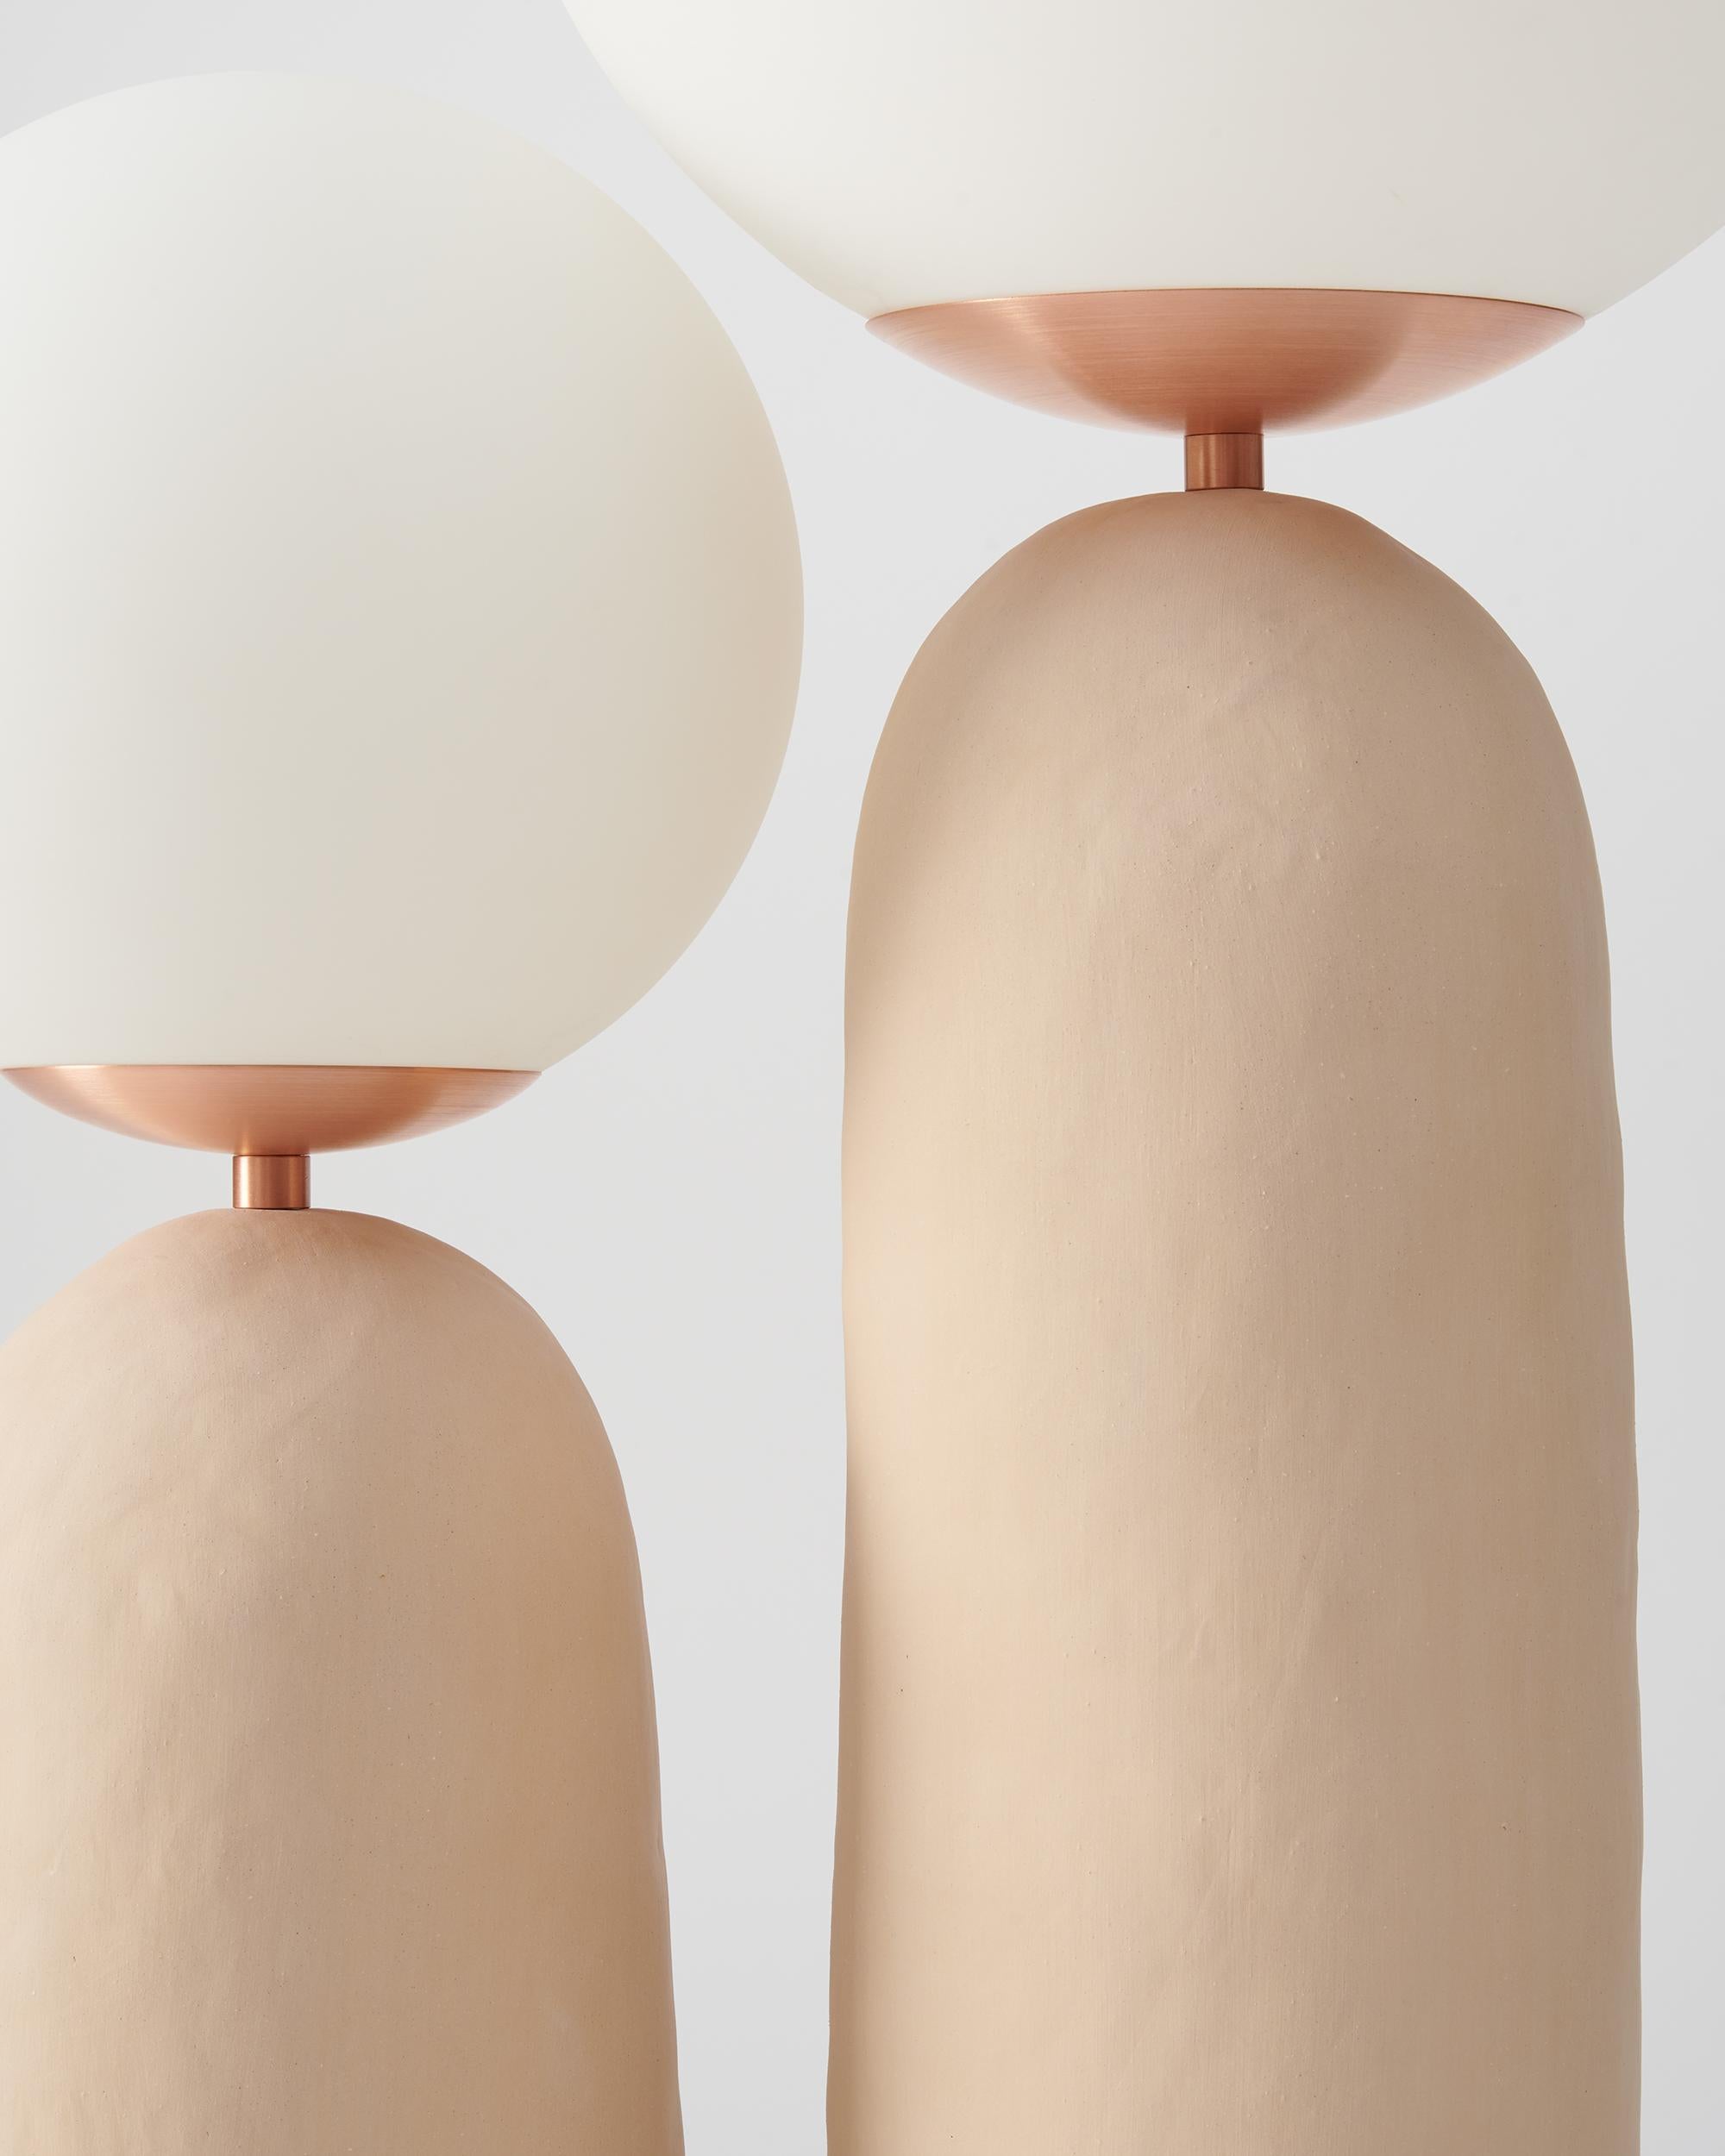 Brushed Contemporary Hand-built Ceramic Base Oo Lamp - Skin Tone #1, Medium For Sale